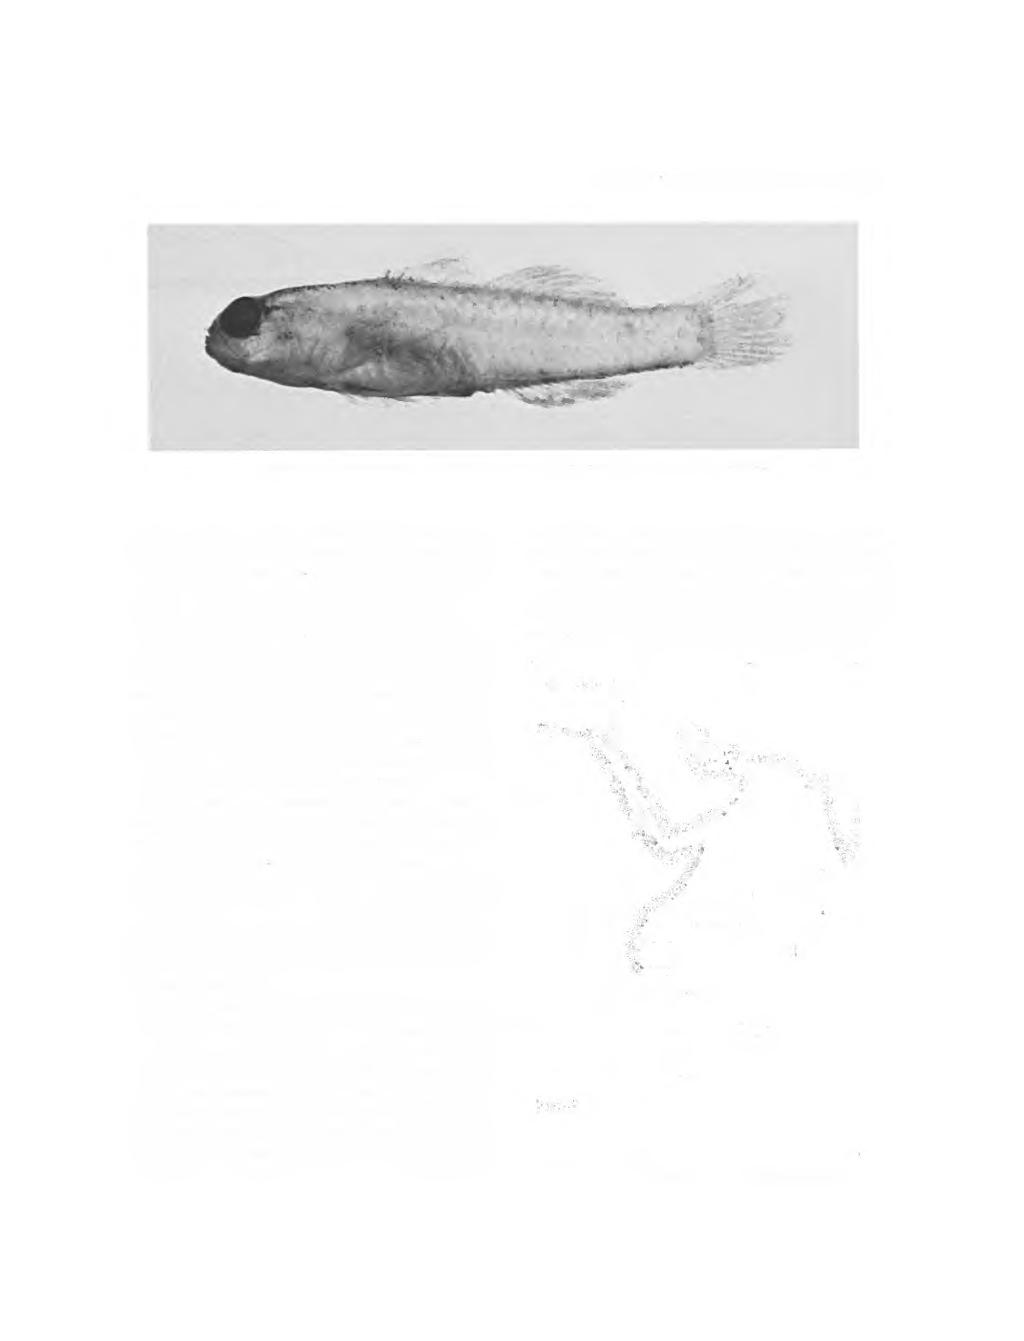 SMITHSONIAN CONTRIBUTIONS TO ZOOLOGY FIGURE. Eviota guttata, USNM 80, holotype, female, 5.8 mm SL, Red Sea.